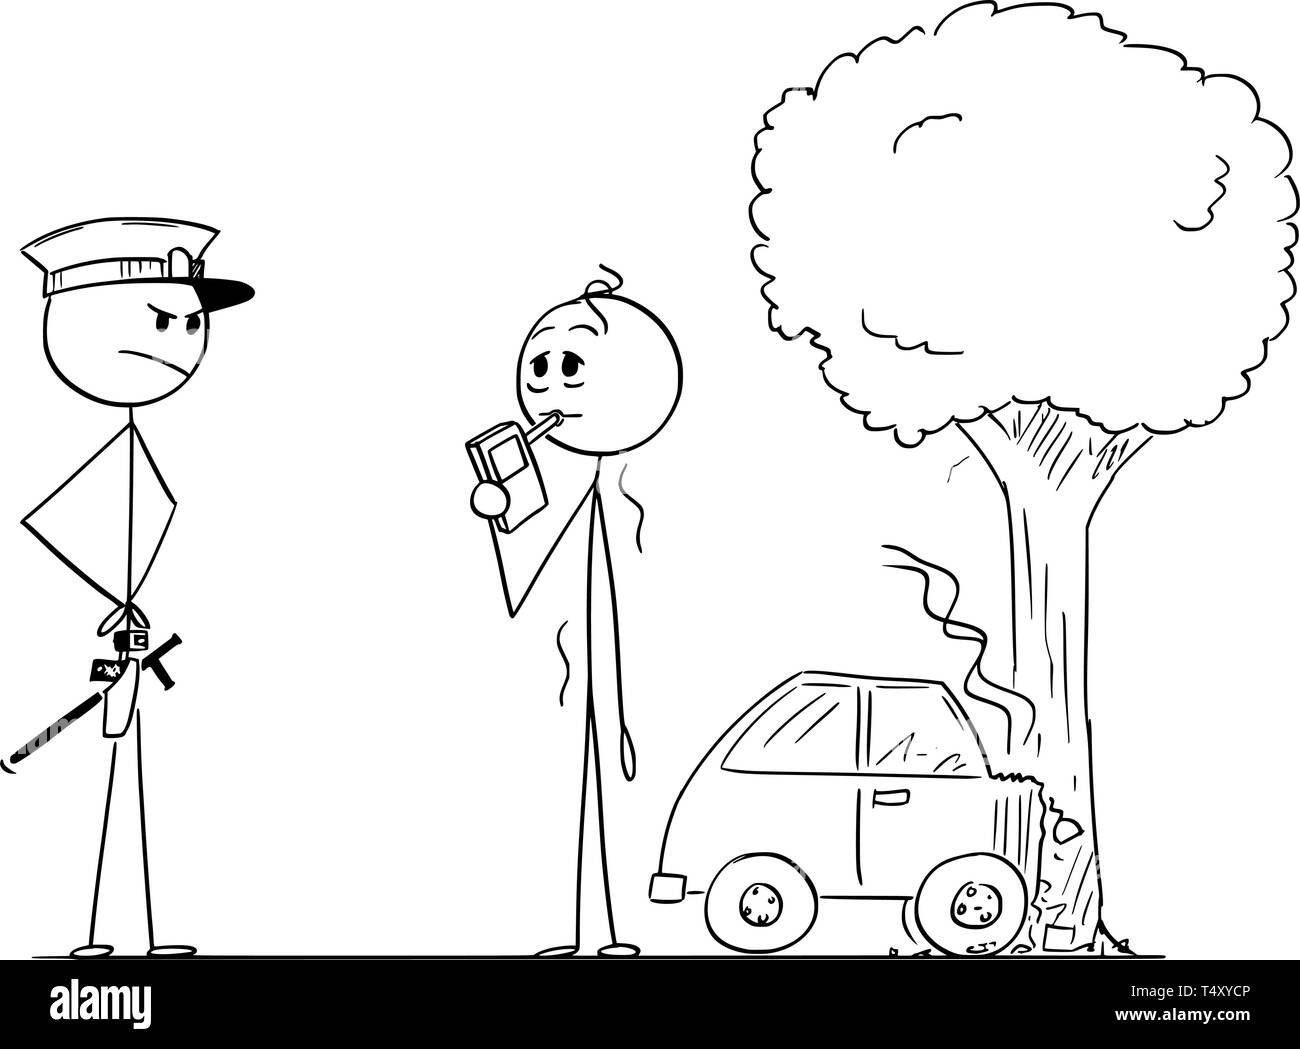 Cartoon Strichmännchen Zeichnung konzeptuelle Abbildung: controlling Alkoholspiegel von betrunkenen Mann oder Fahrer nach Verkehrsunfall. Stock Vektor